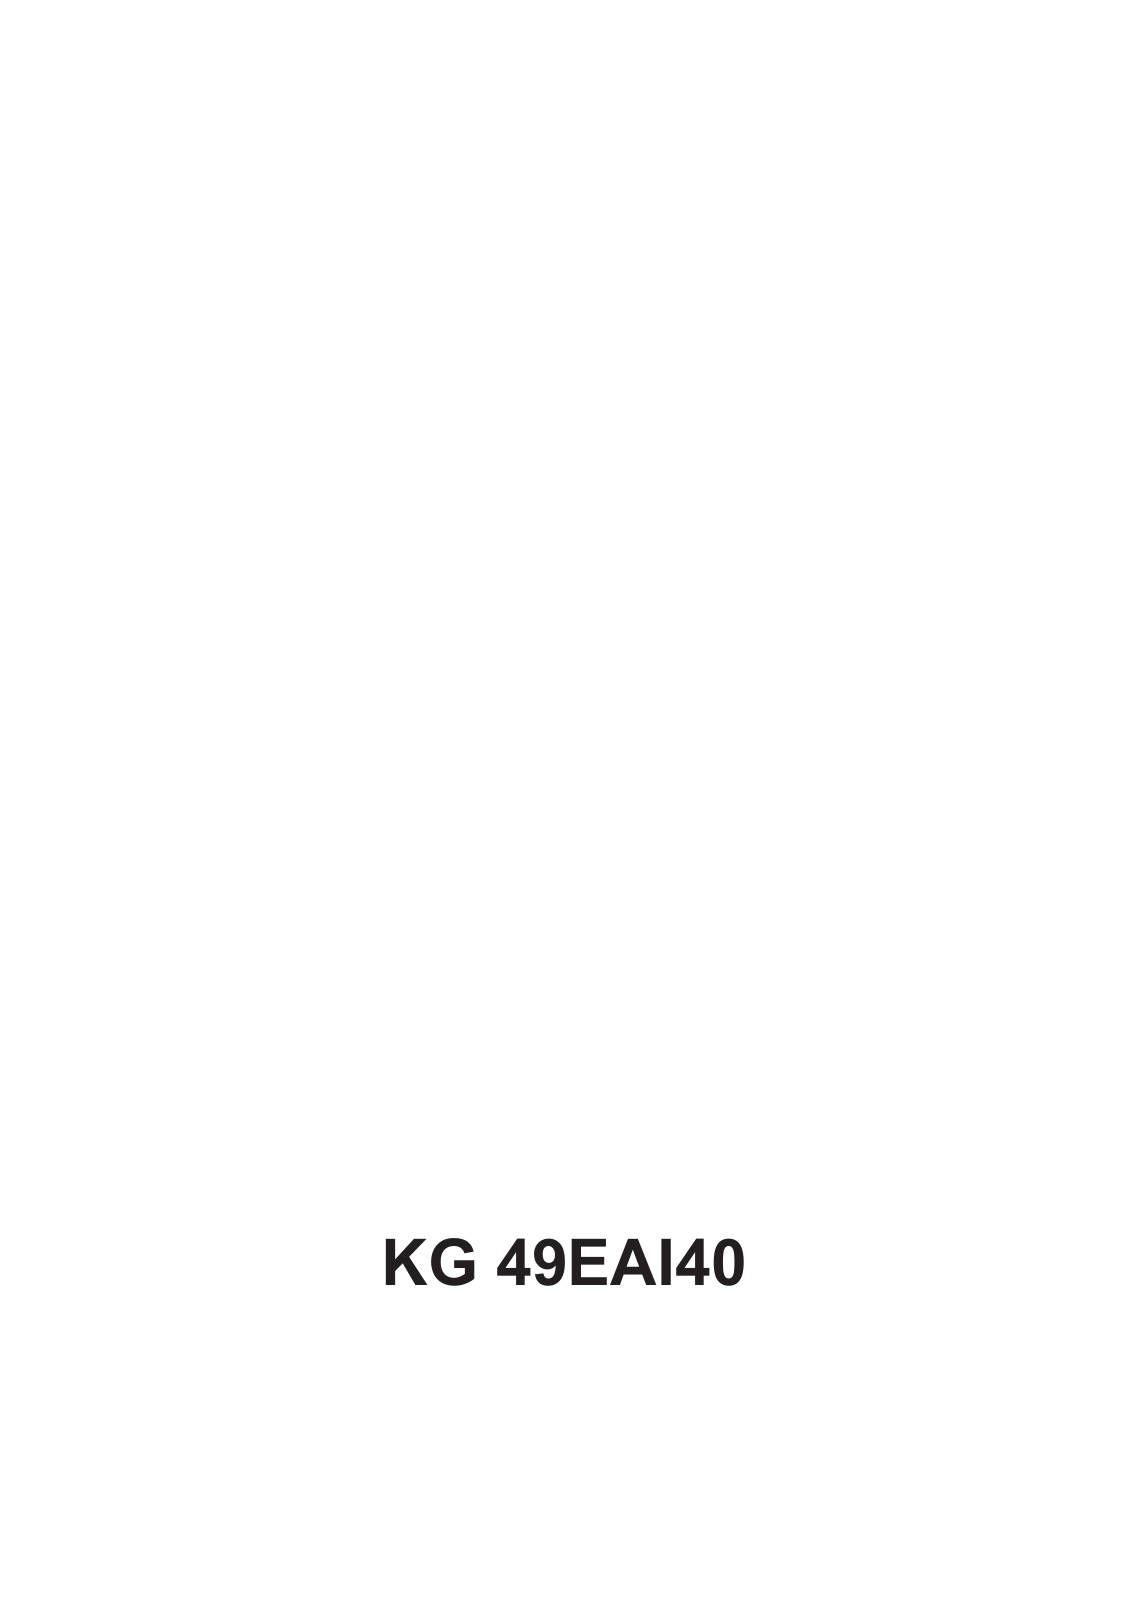 Siemens KG 49EAI40 User Manual